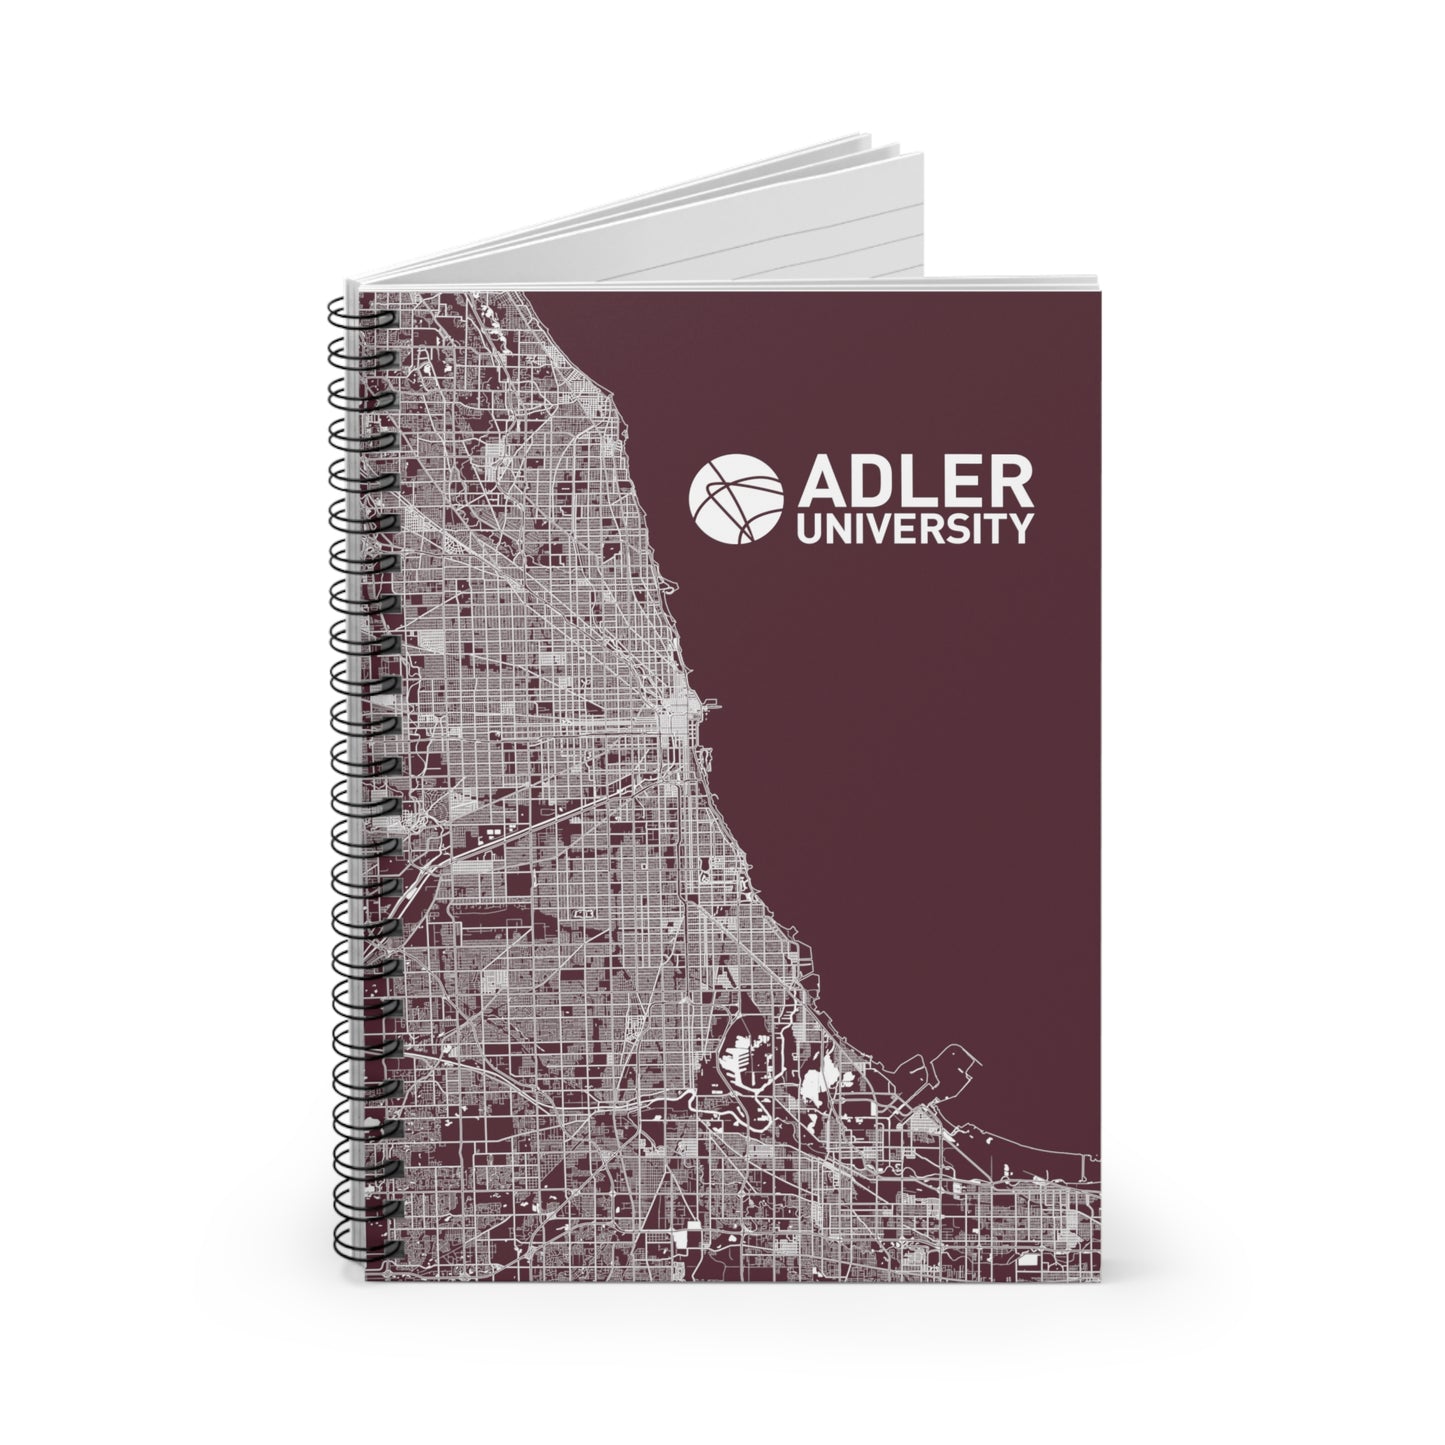 Adler University Chicago Spiral Notebook - Ruled Line